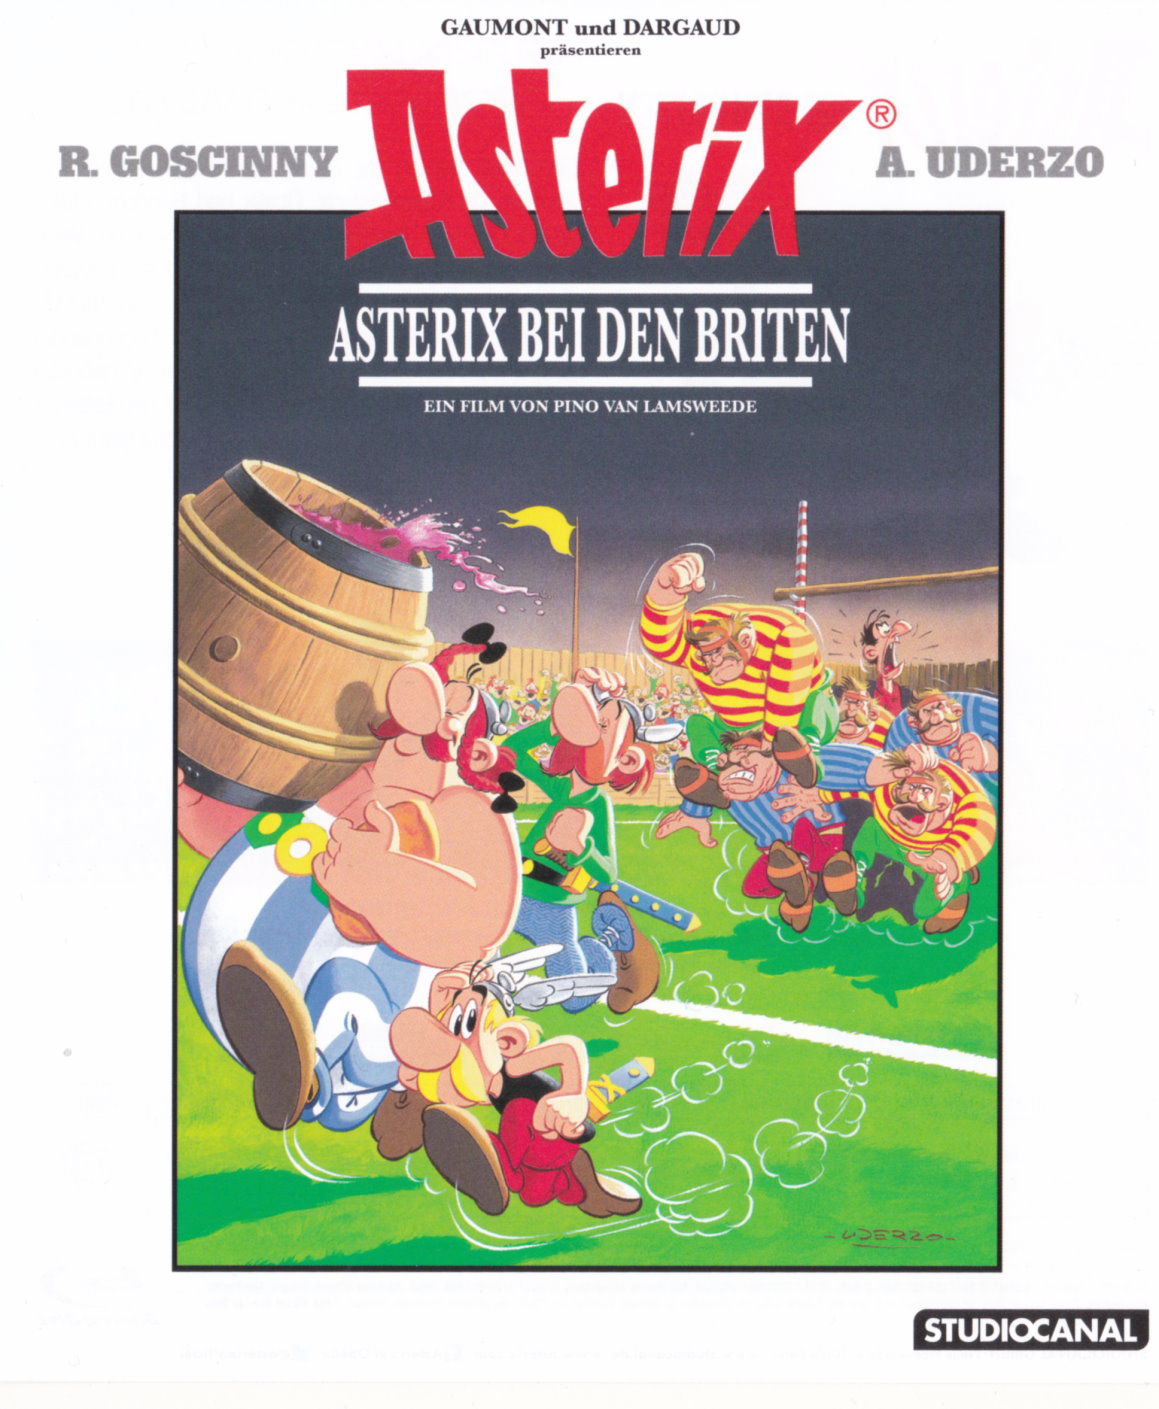 Cover - Asterix bei den Briten.jpg